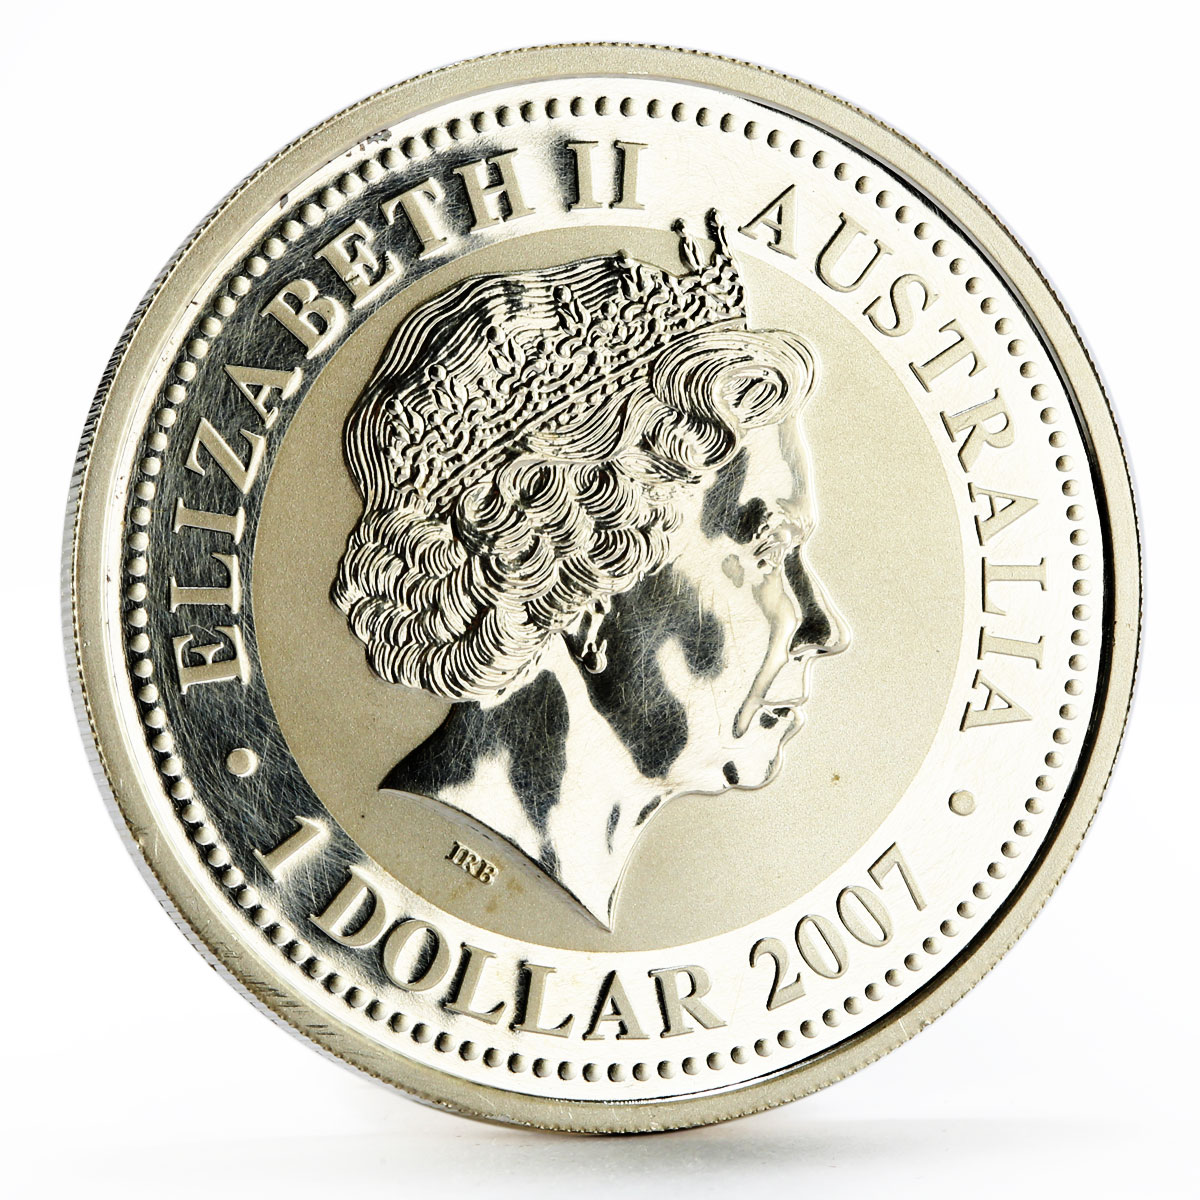 Australia 1 dollar Lunar Calendar I series Year of the Ox silver coin 2007